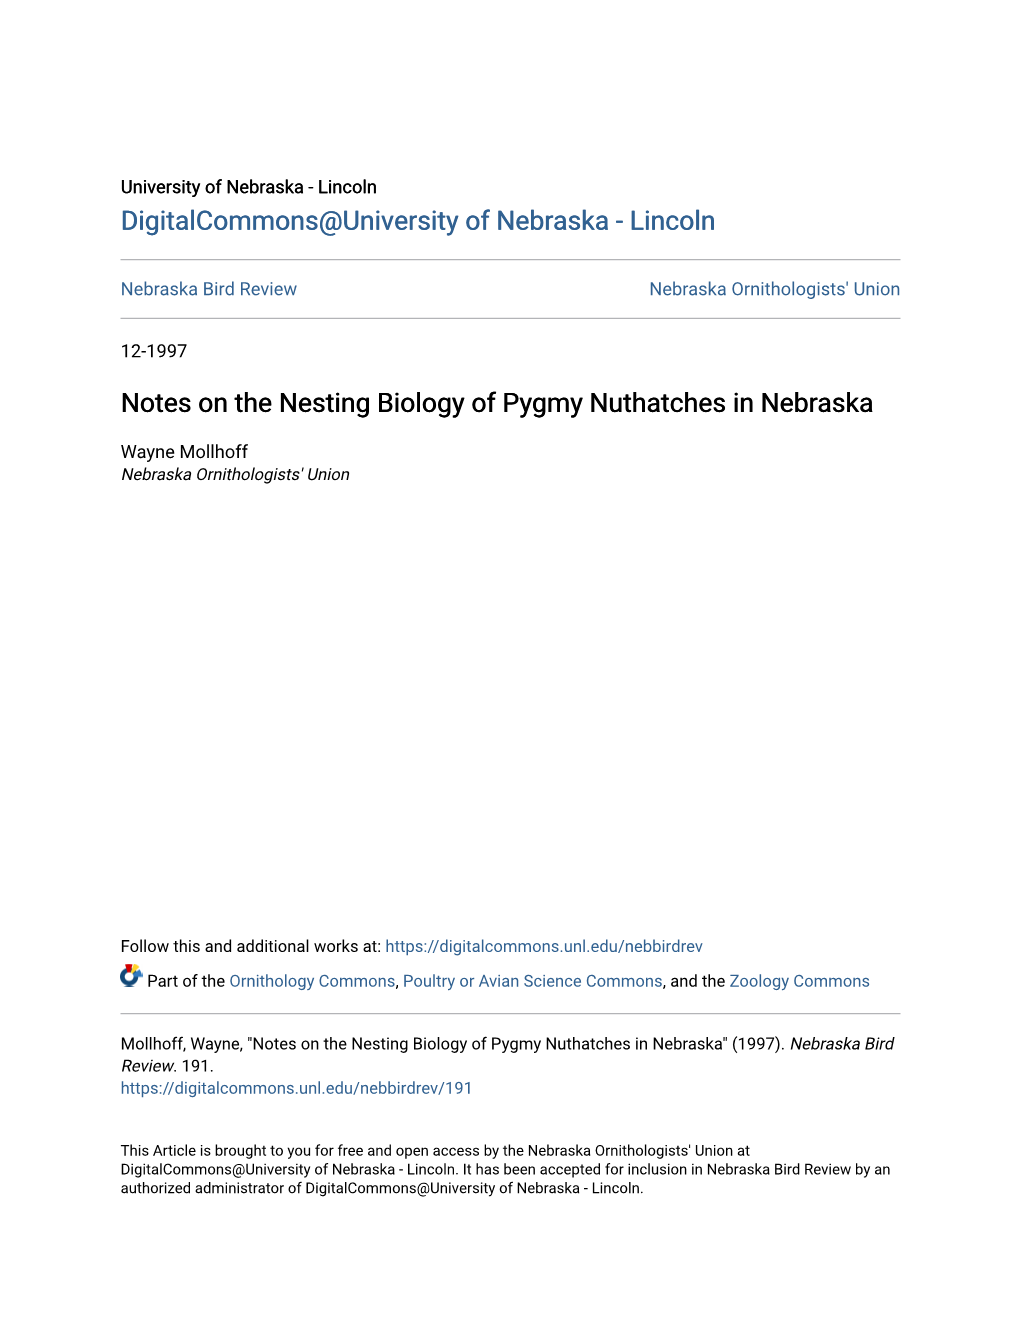 Notes on the Nesting Biology of Pygmy Nuthatches in Nebraska